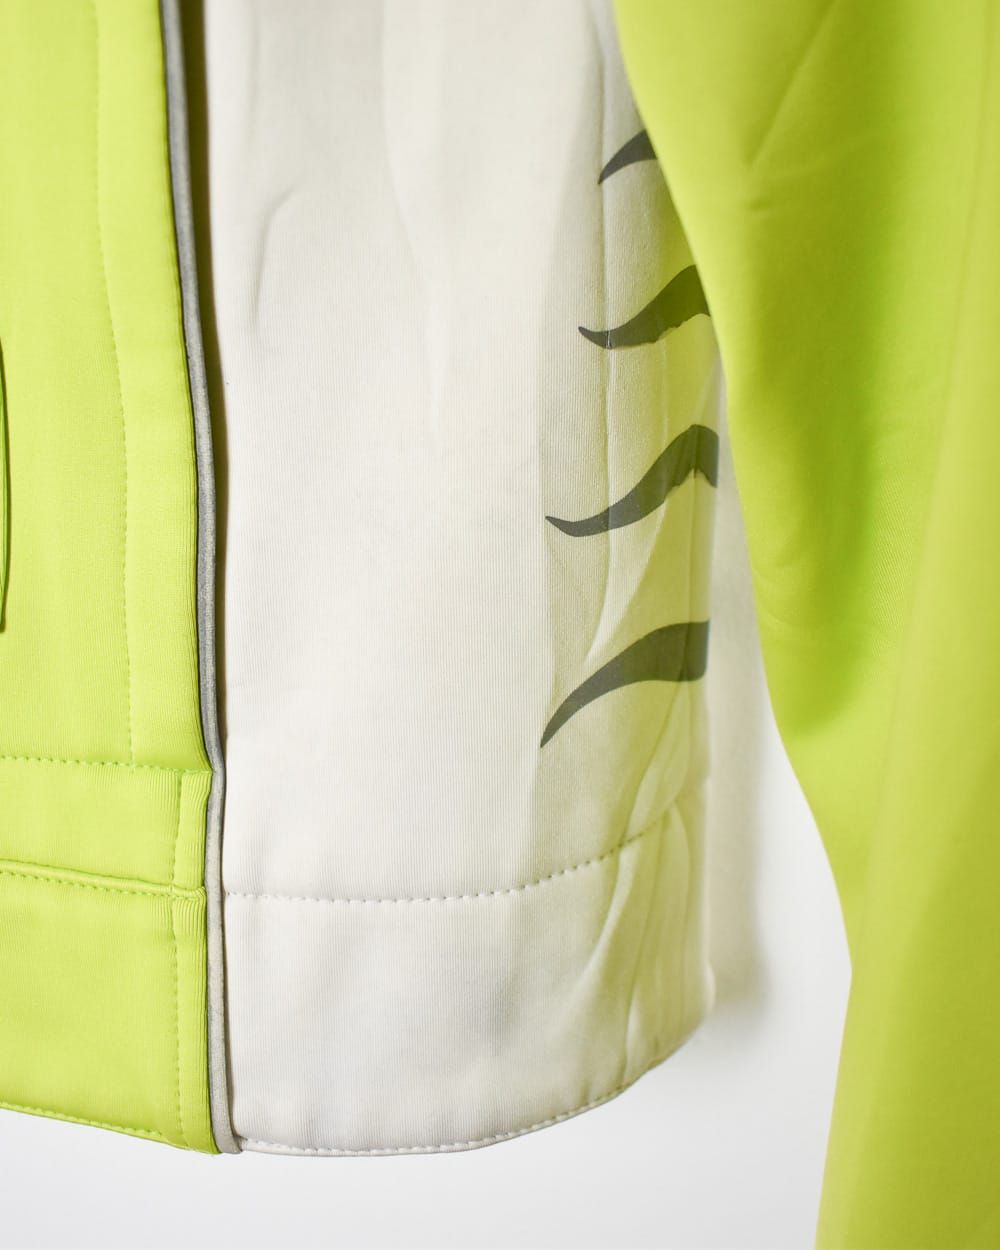 Green Bogner Pro Supplies Motorcycle Racing Jacket - Small